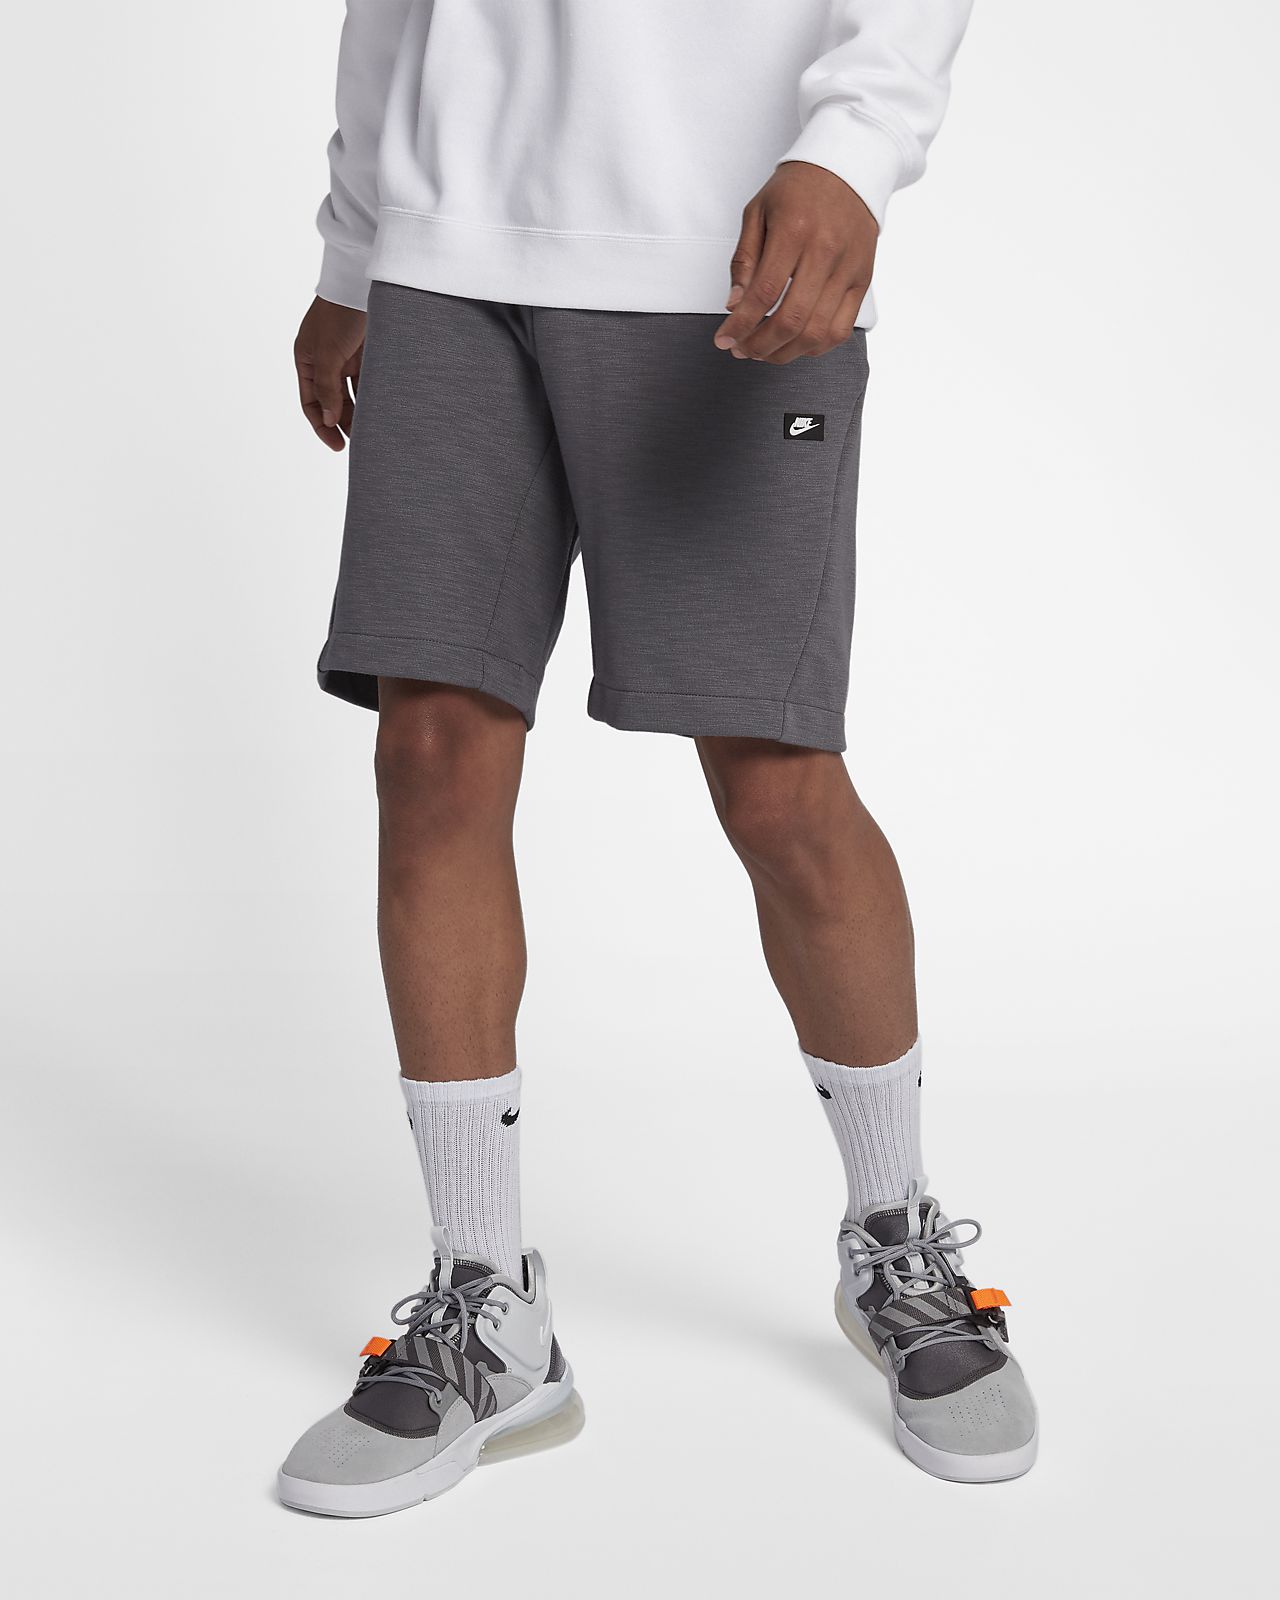 nike sportswear optic shorts cheap online